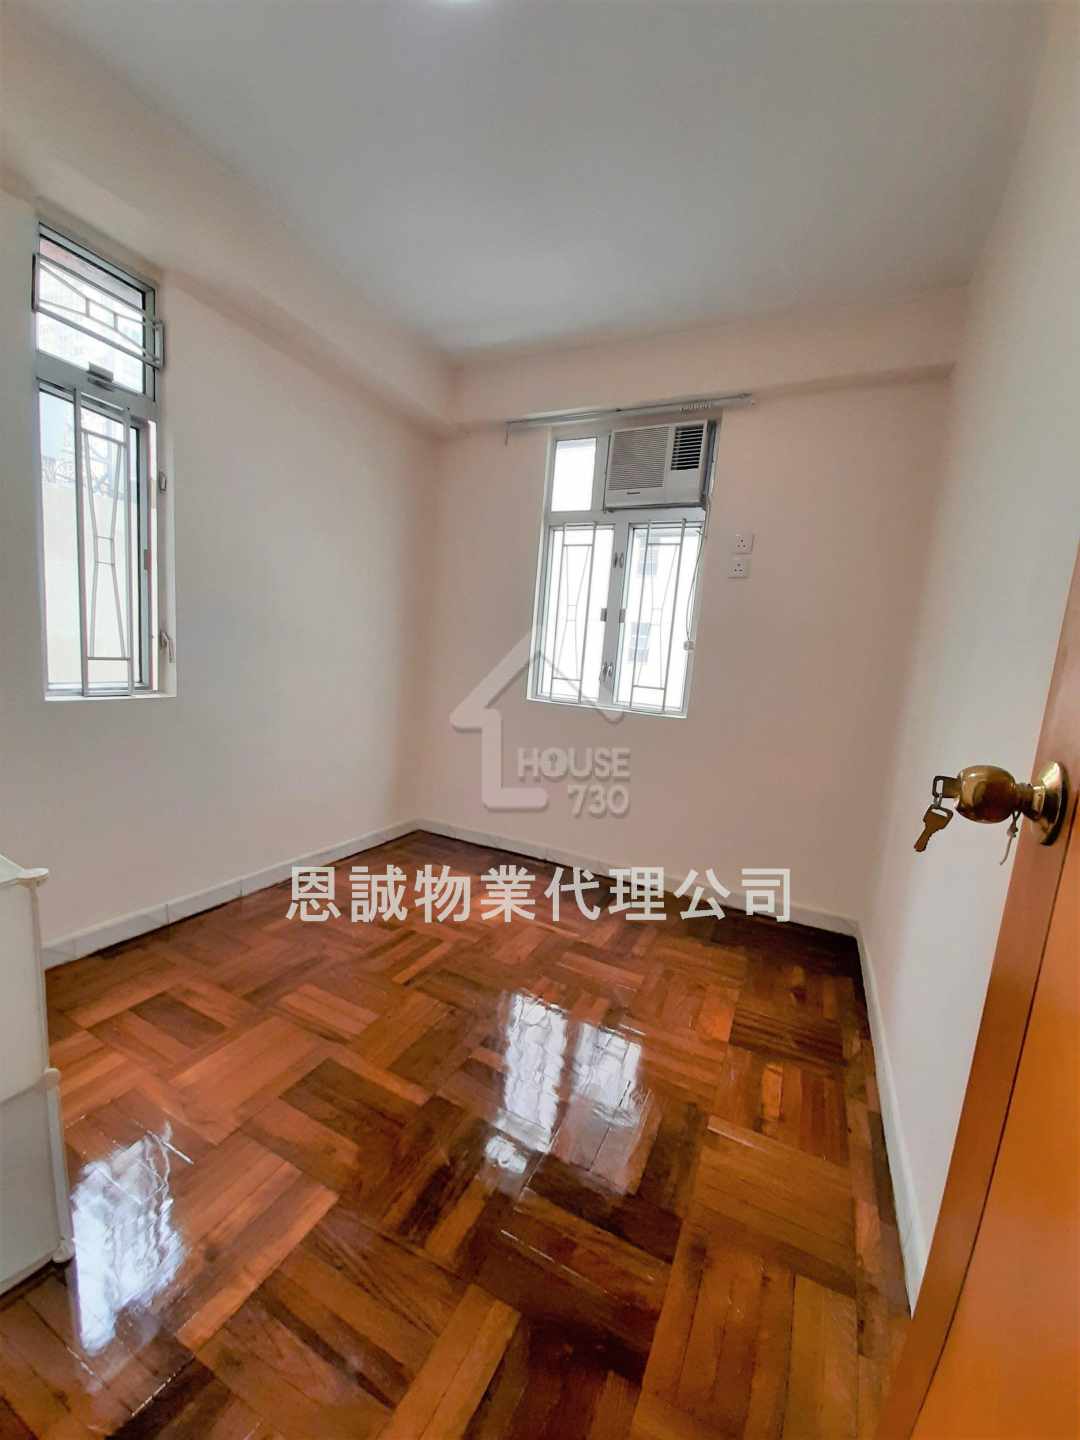 Single Building (Yuen Long District) 元朗洋樓 Lower Floor Bedroom 1 House730-6863951